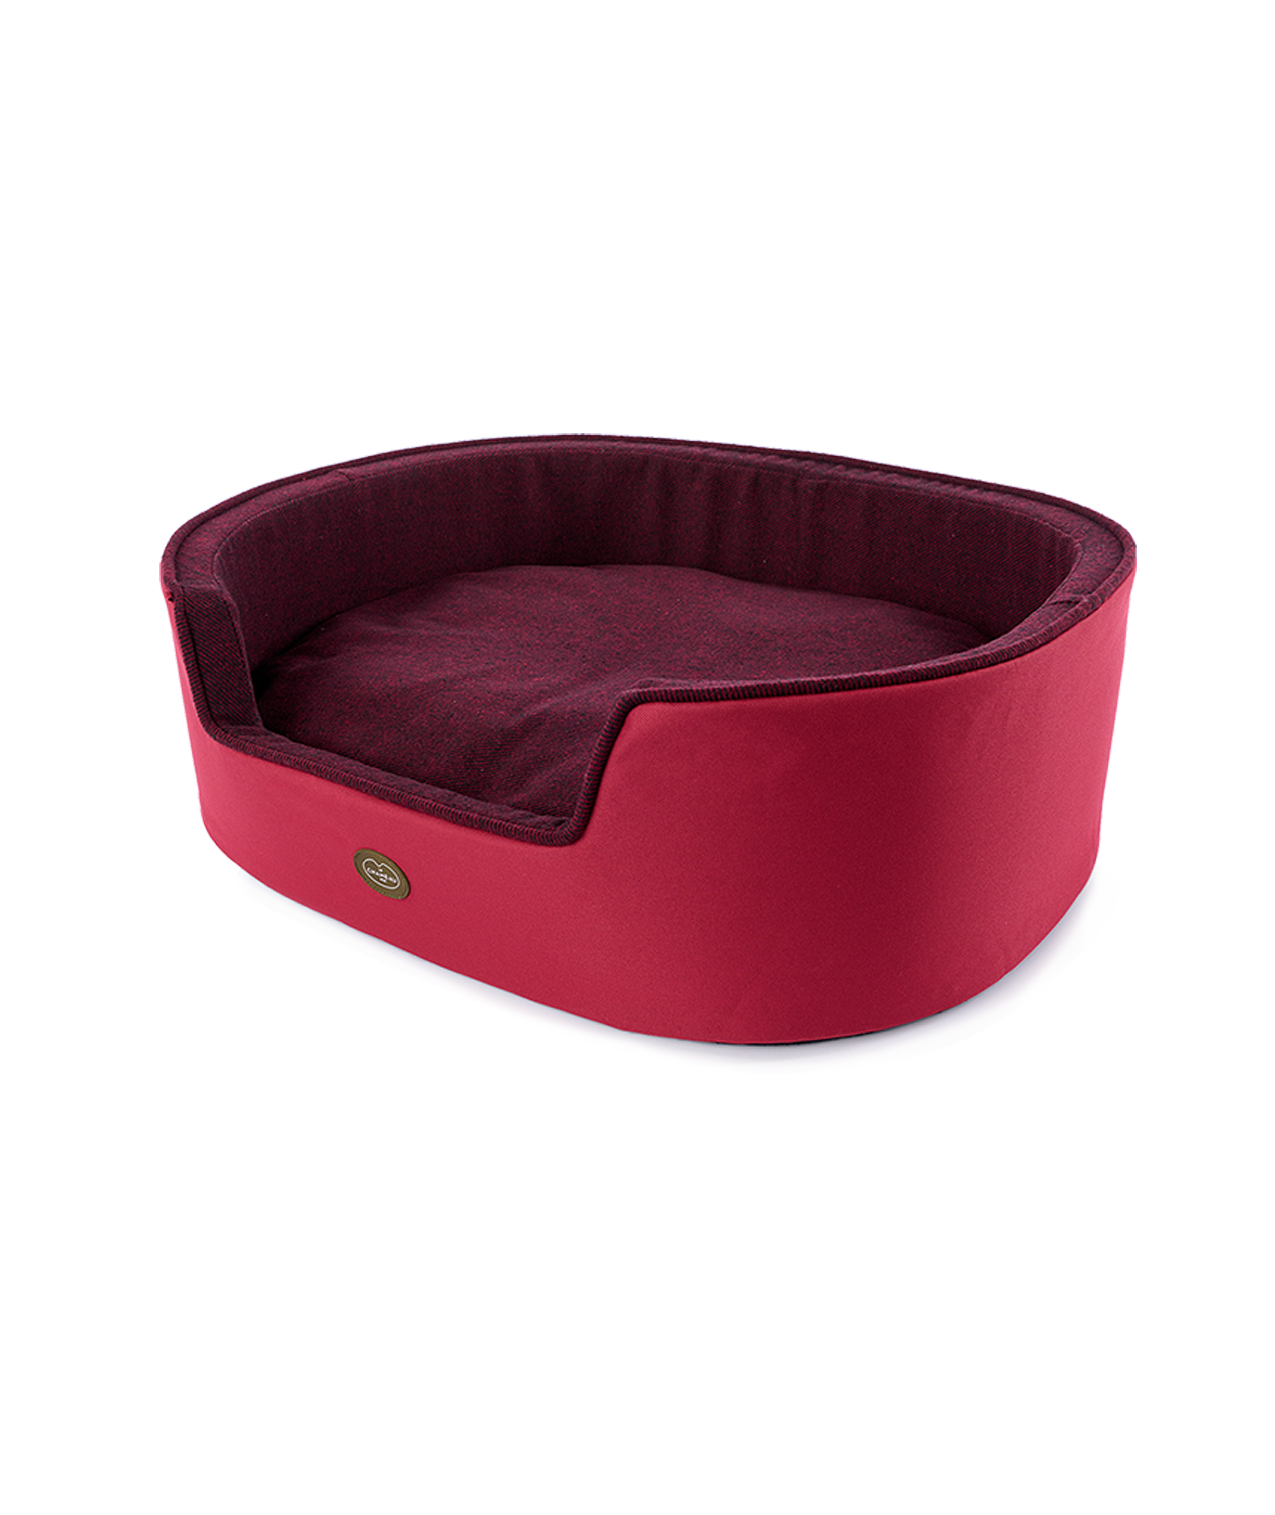 Le Chameau - Luxury Dog Bed